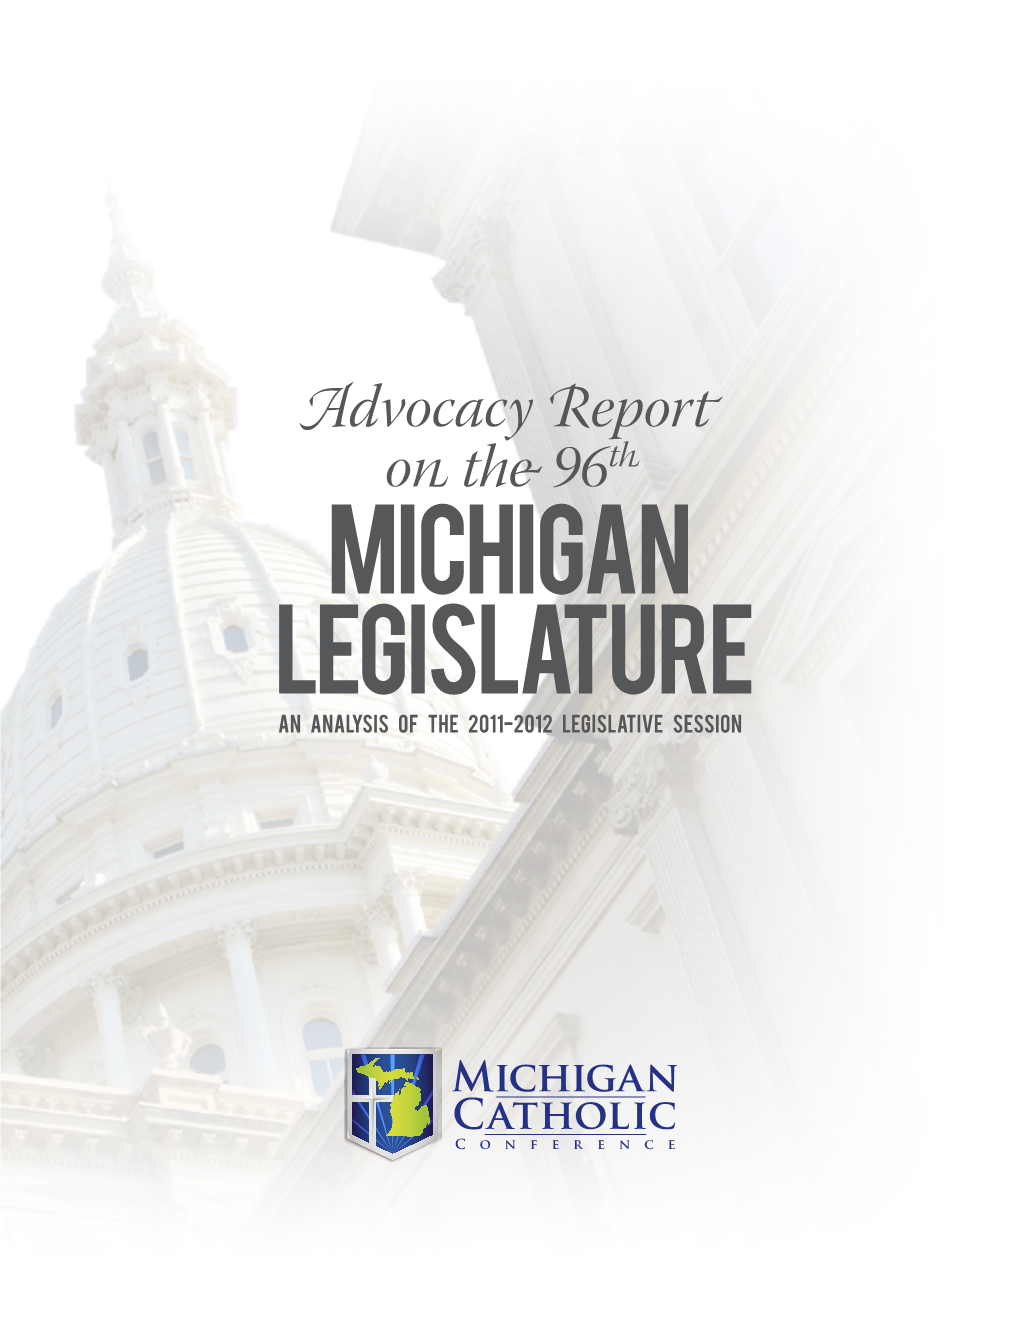 Michigan Legislature an Analysis of the 2011-2012 Legislative Session